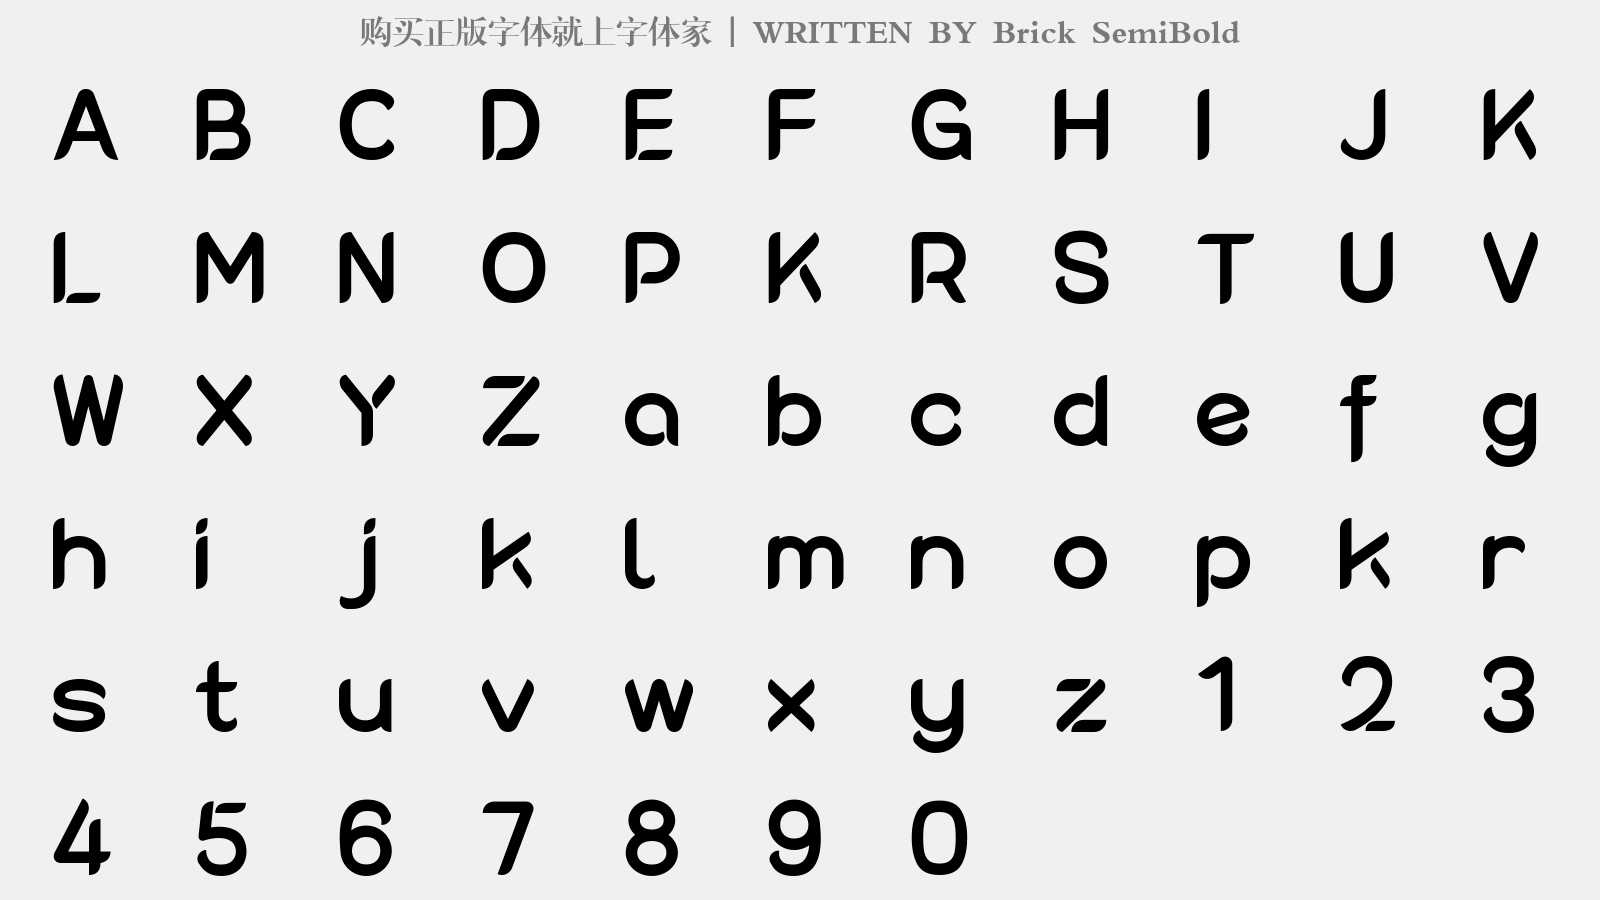 Brick SemiBold - 大写字母/小写字母/数字